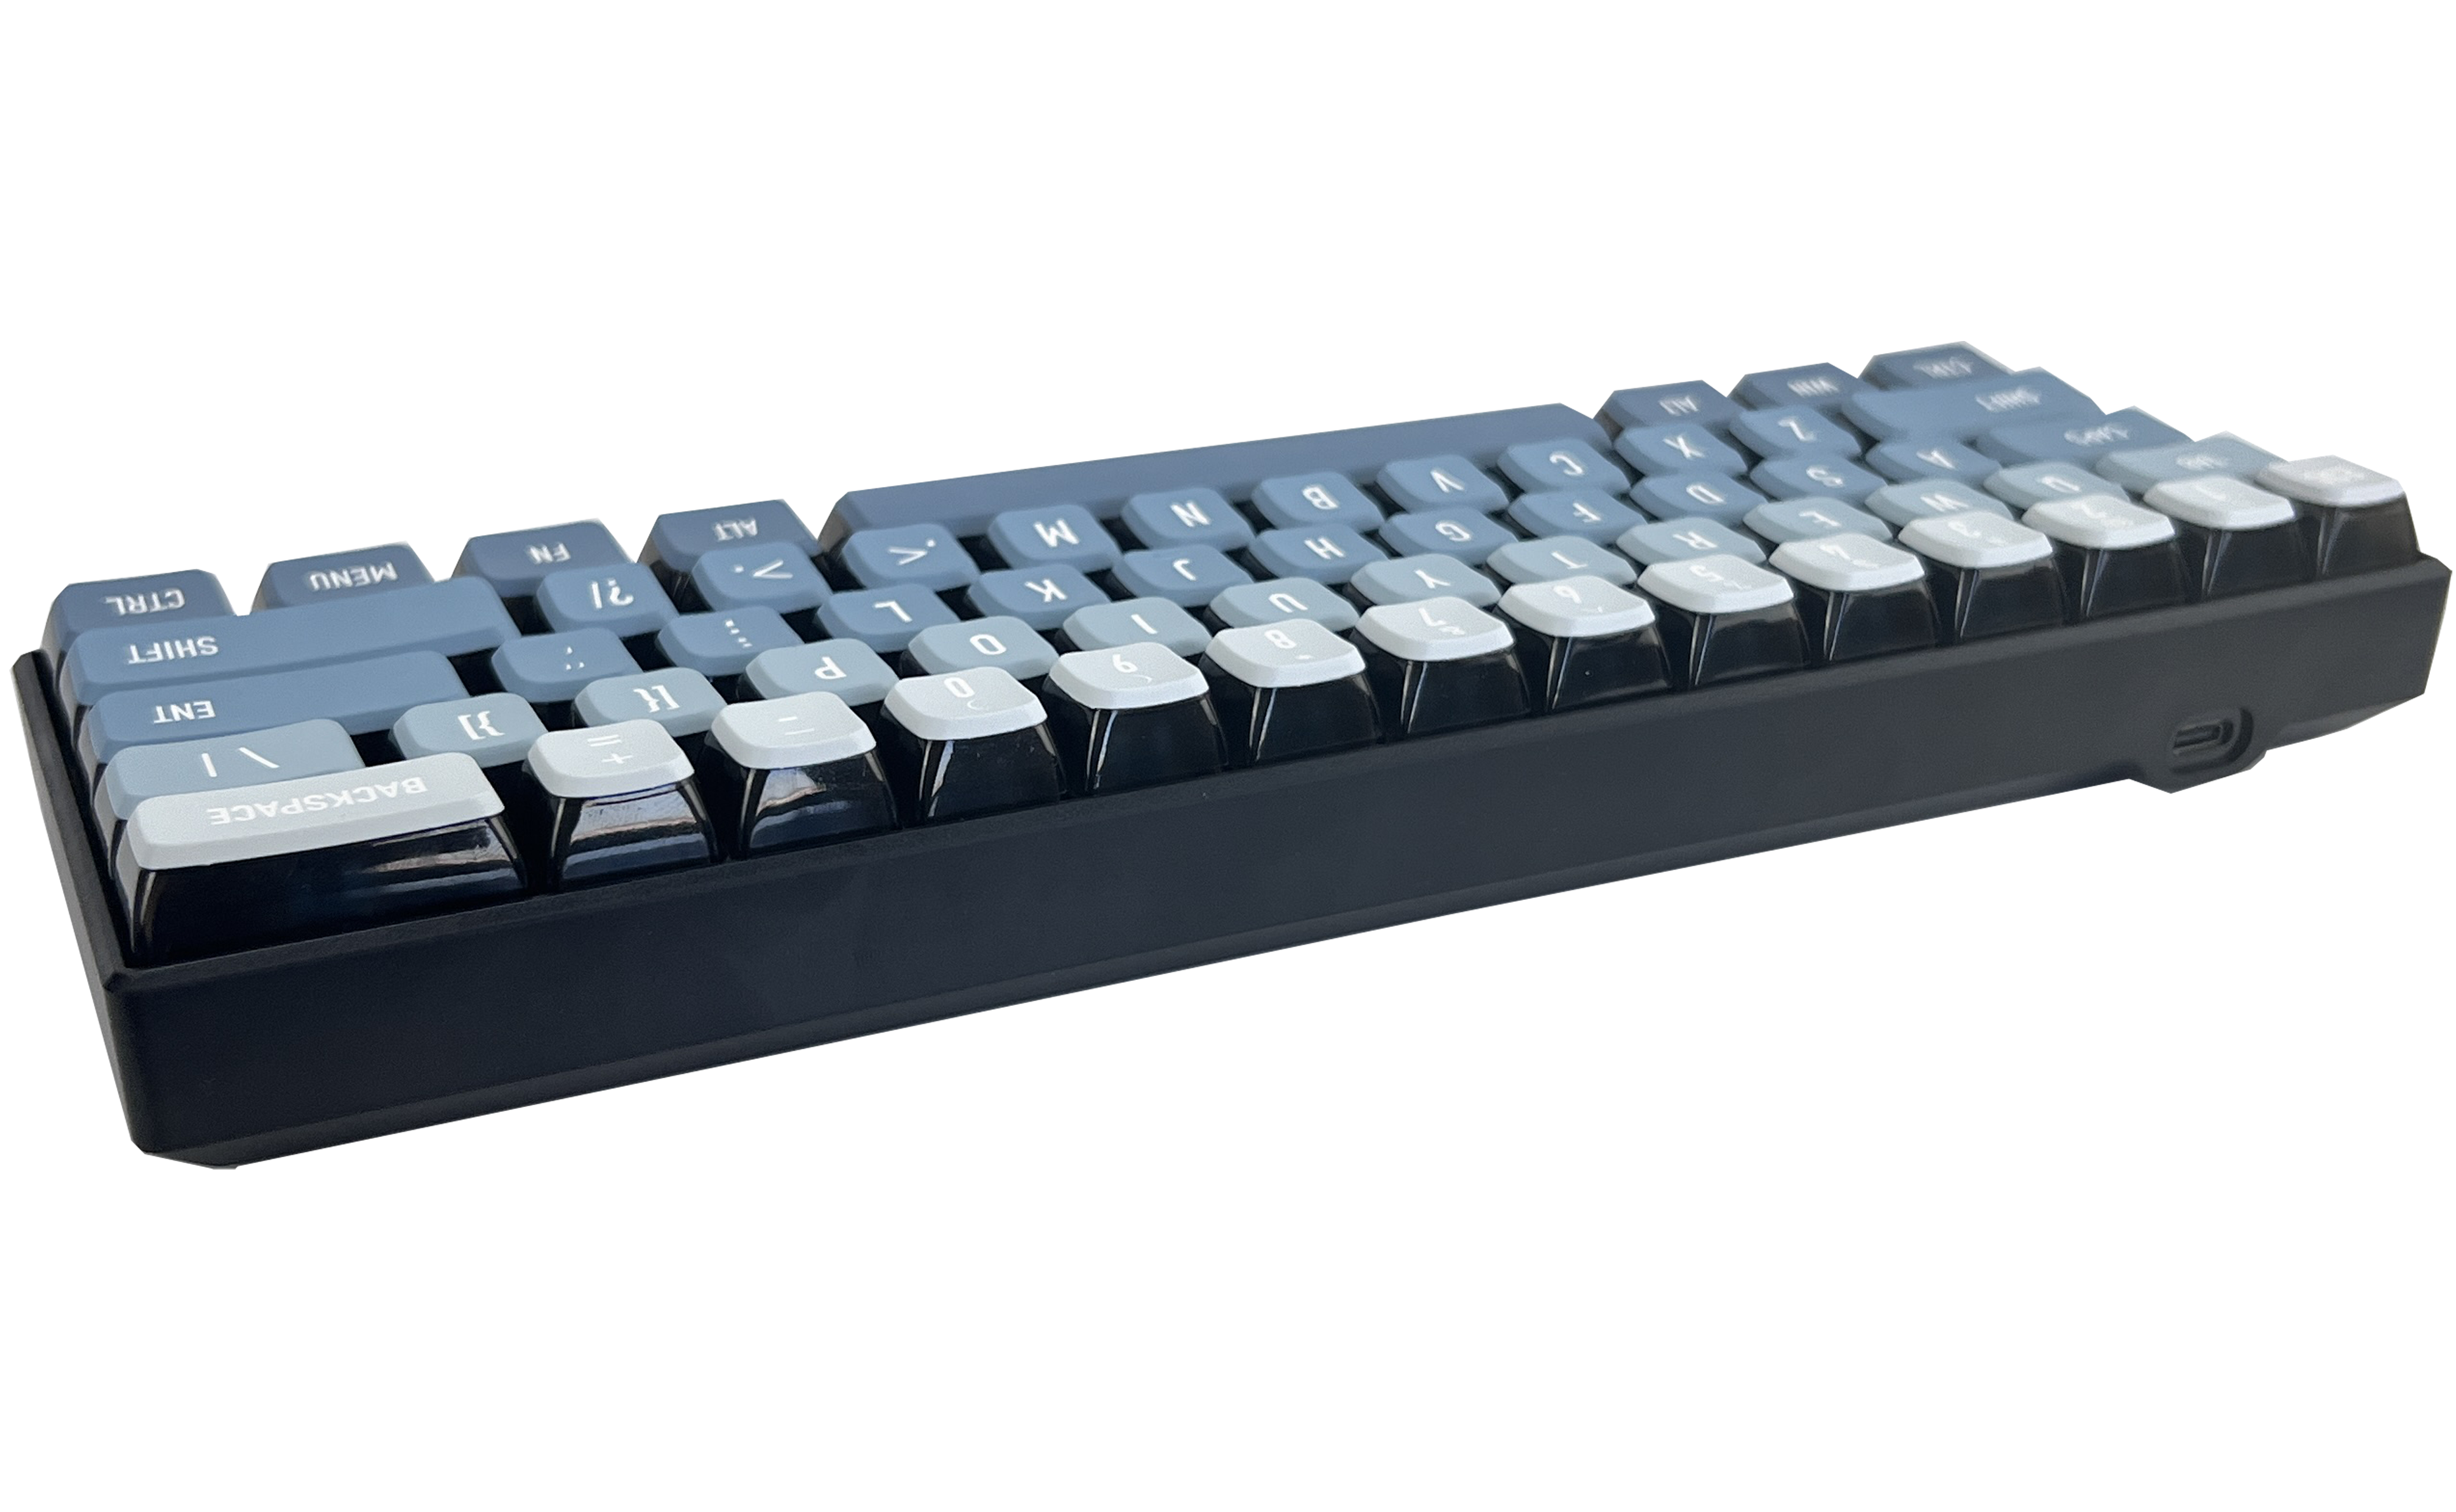 Grayscale Pudding keycaps READSON WL61 Key RGB Light Tri-mode Mechanical Keyboard